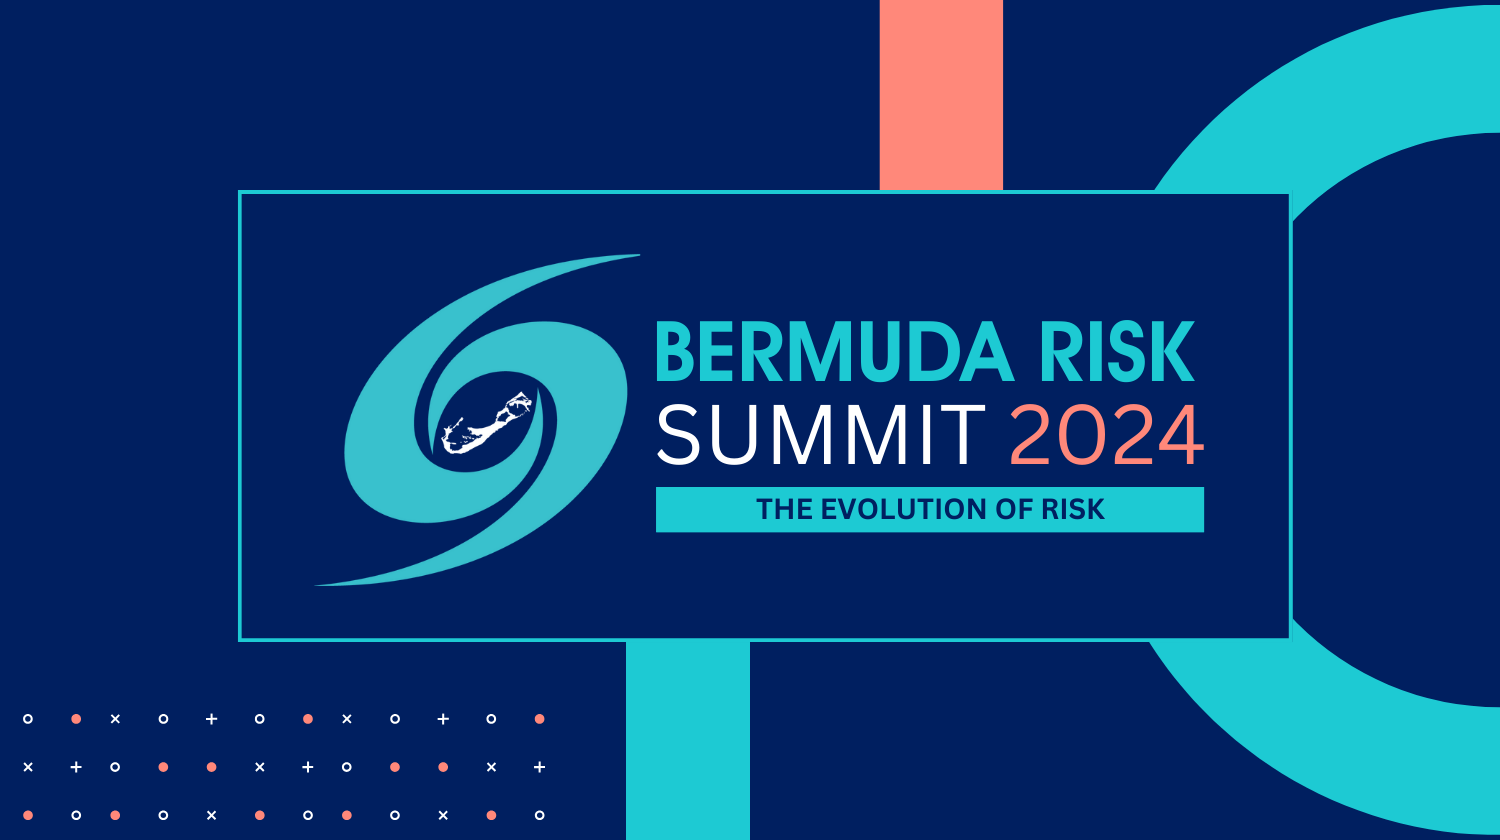 AI Keynote Kicks Off Innovation Conversations at Bermuda Risk Summit